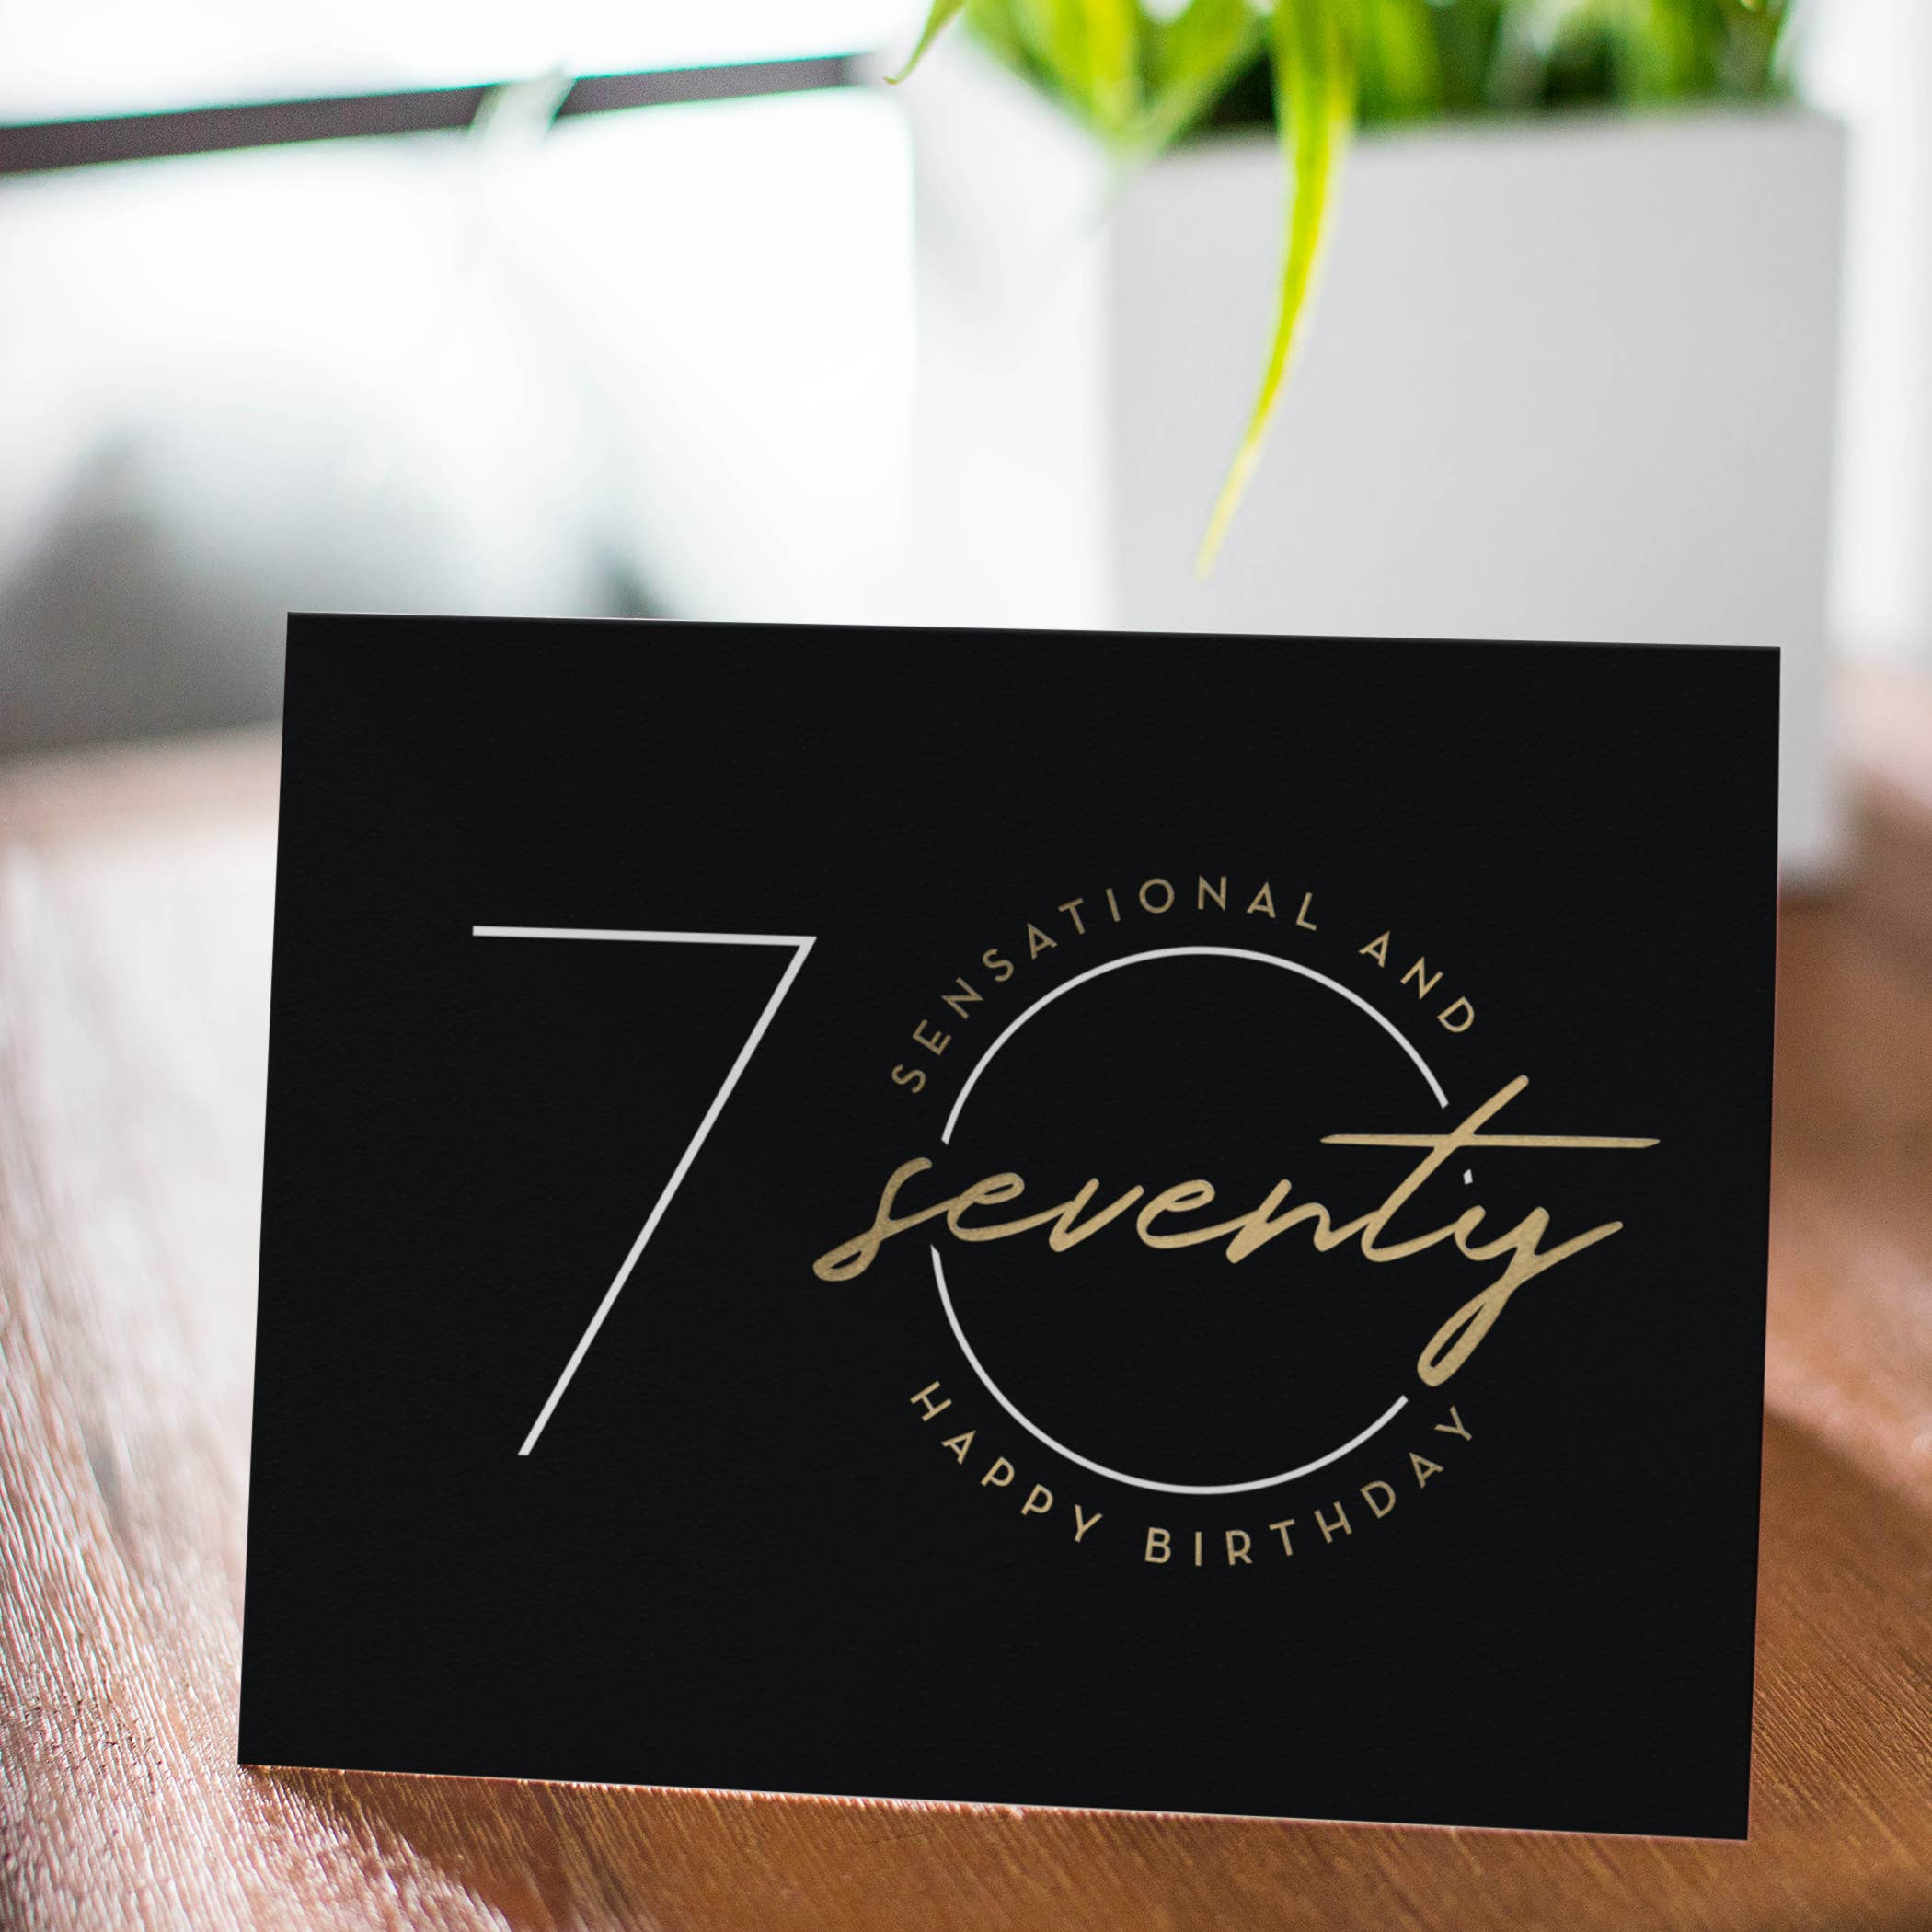 Sensational Seventy – Award Winning 70th Birthday Card